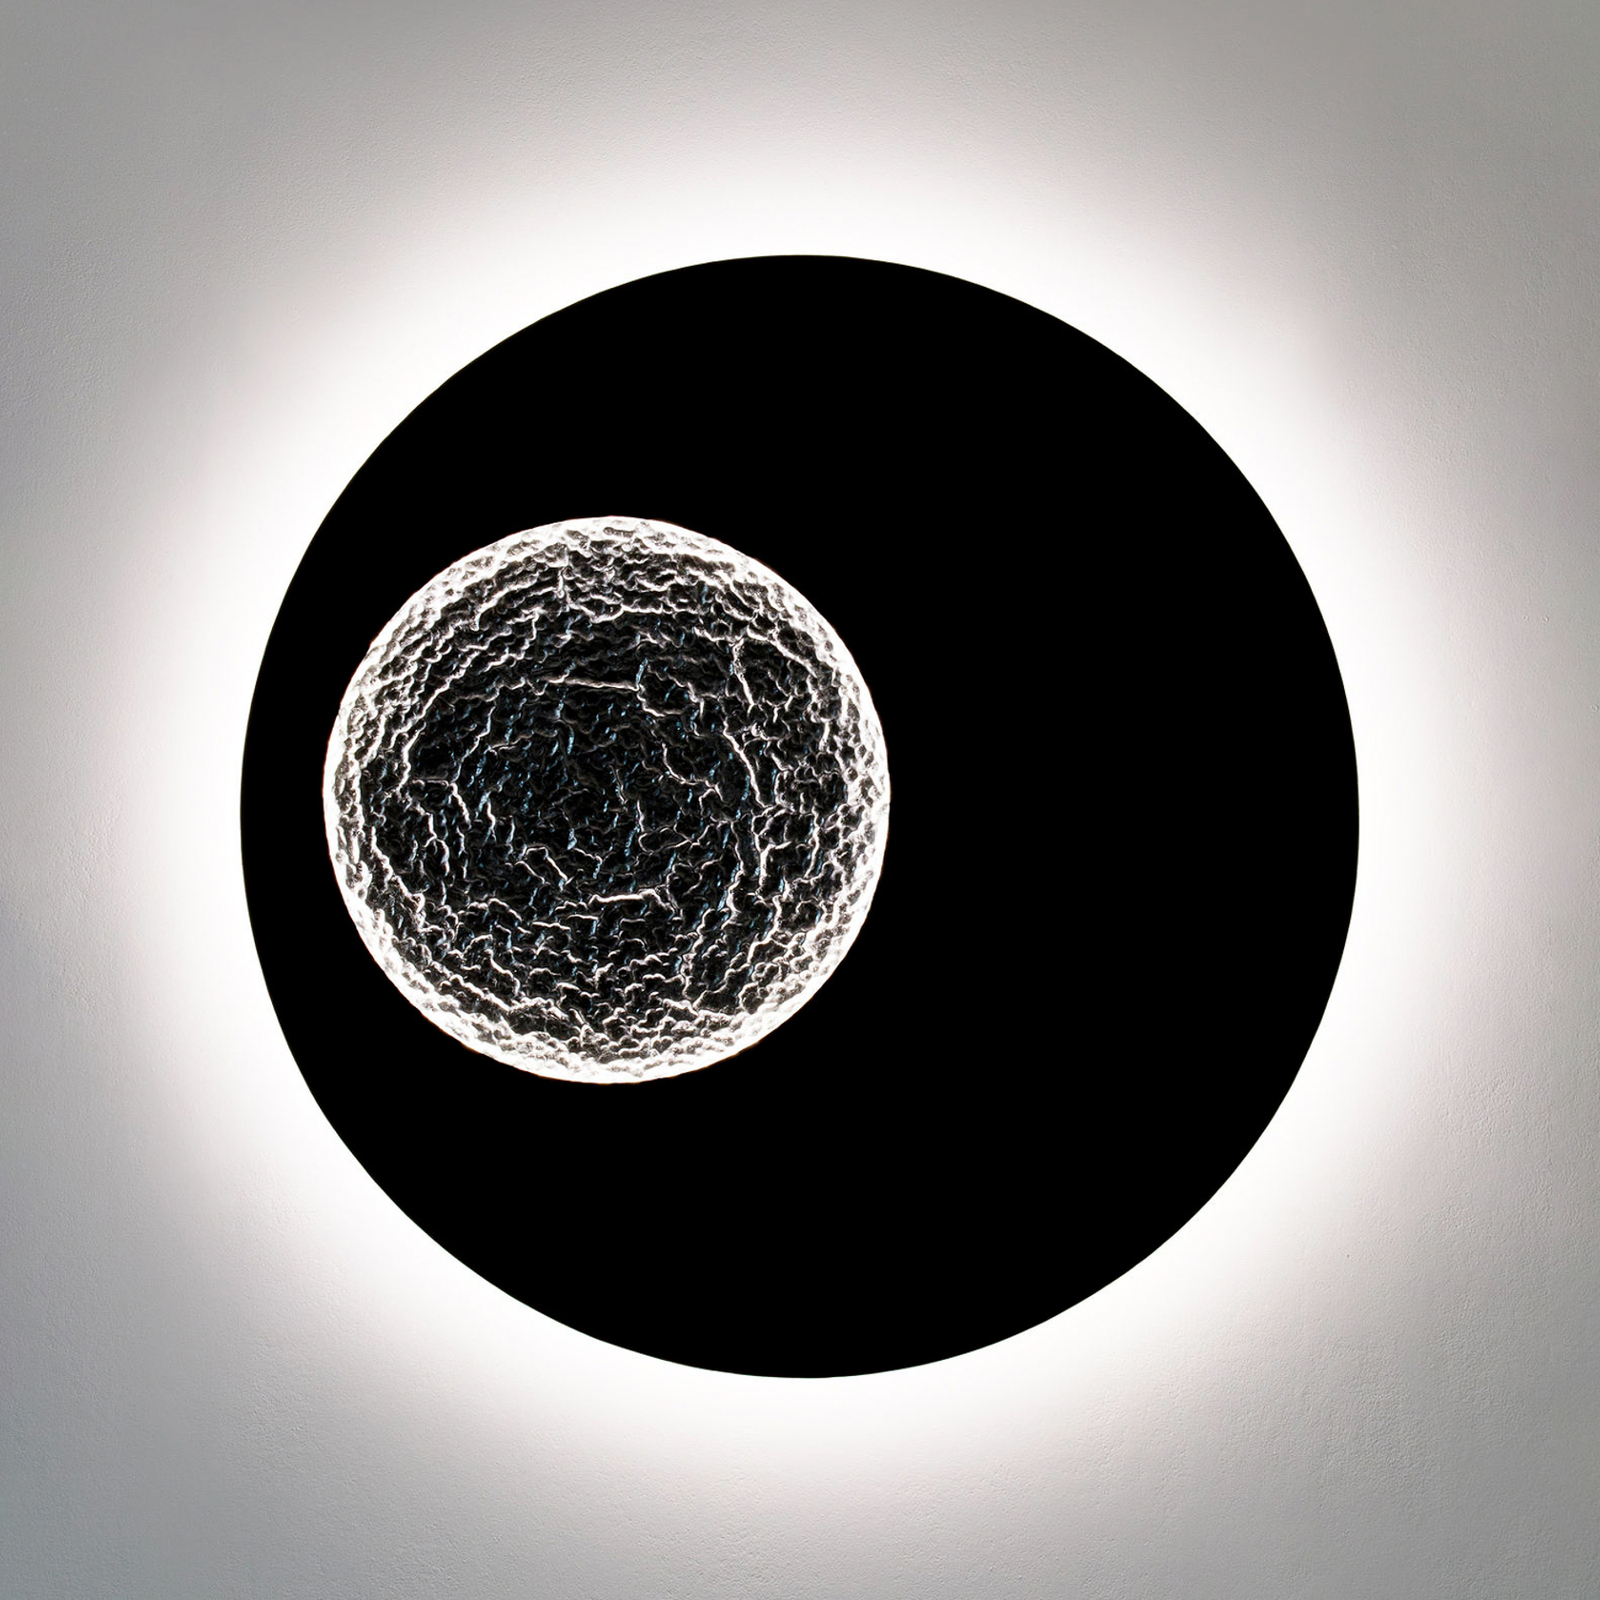 LED wandlamp Luna, bruin-zwart-zilver, Ø 120 cm, ijzer